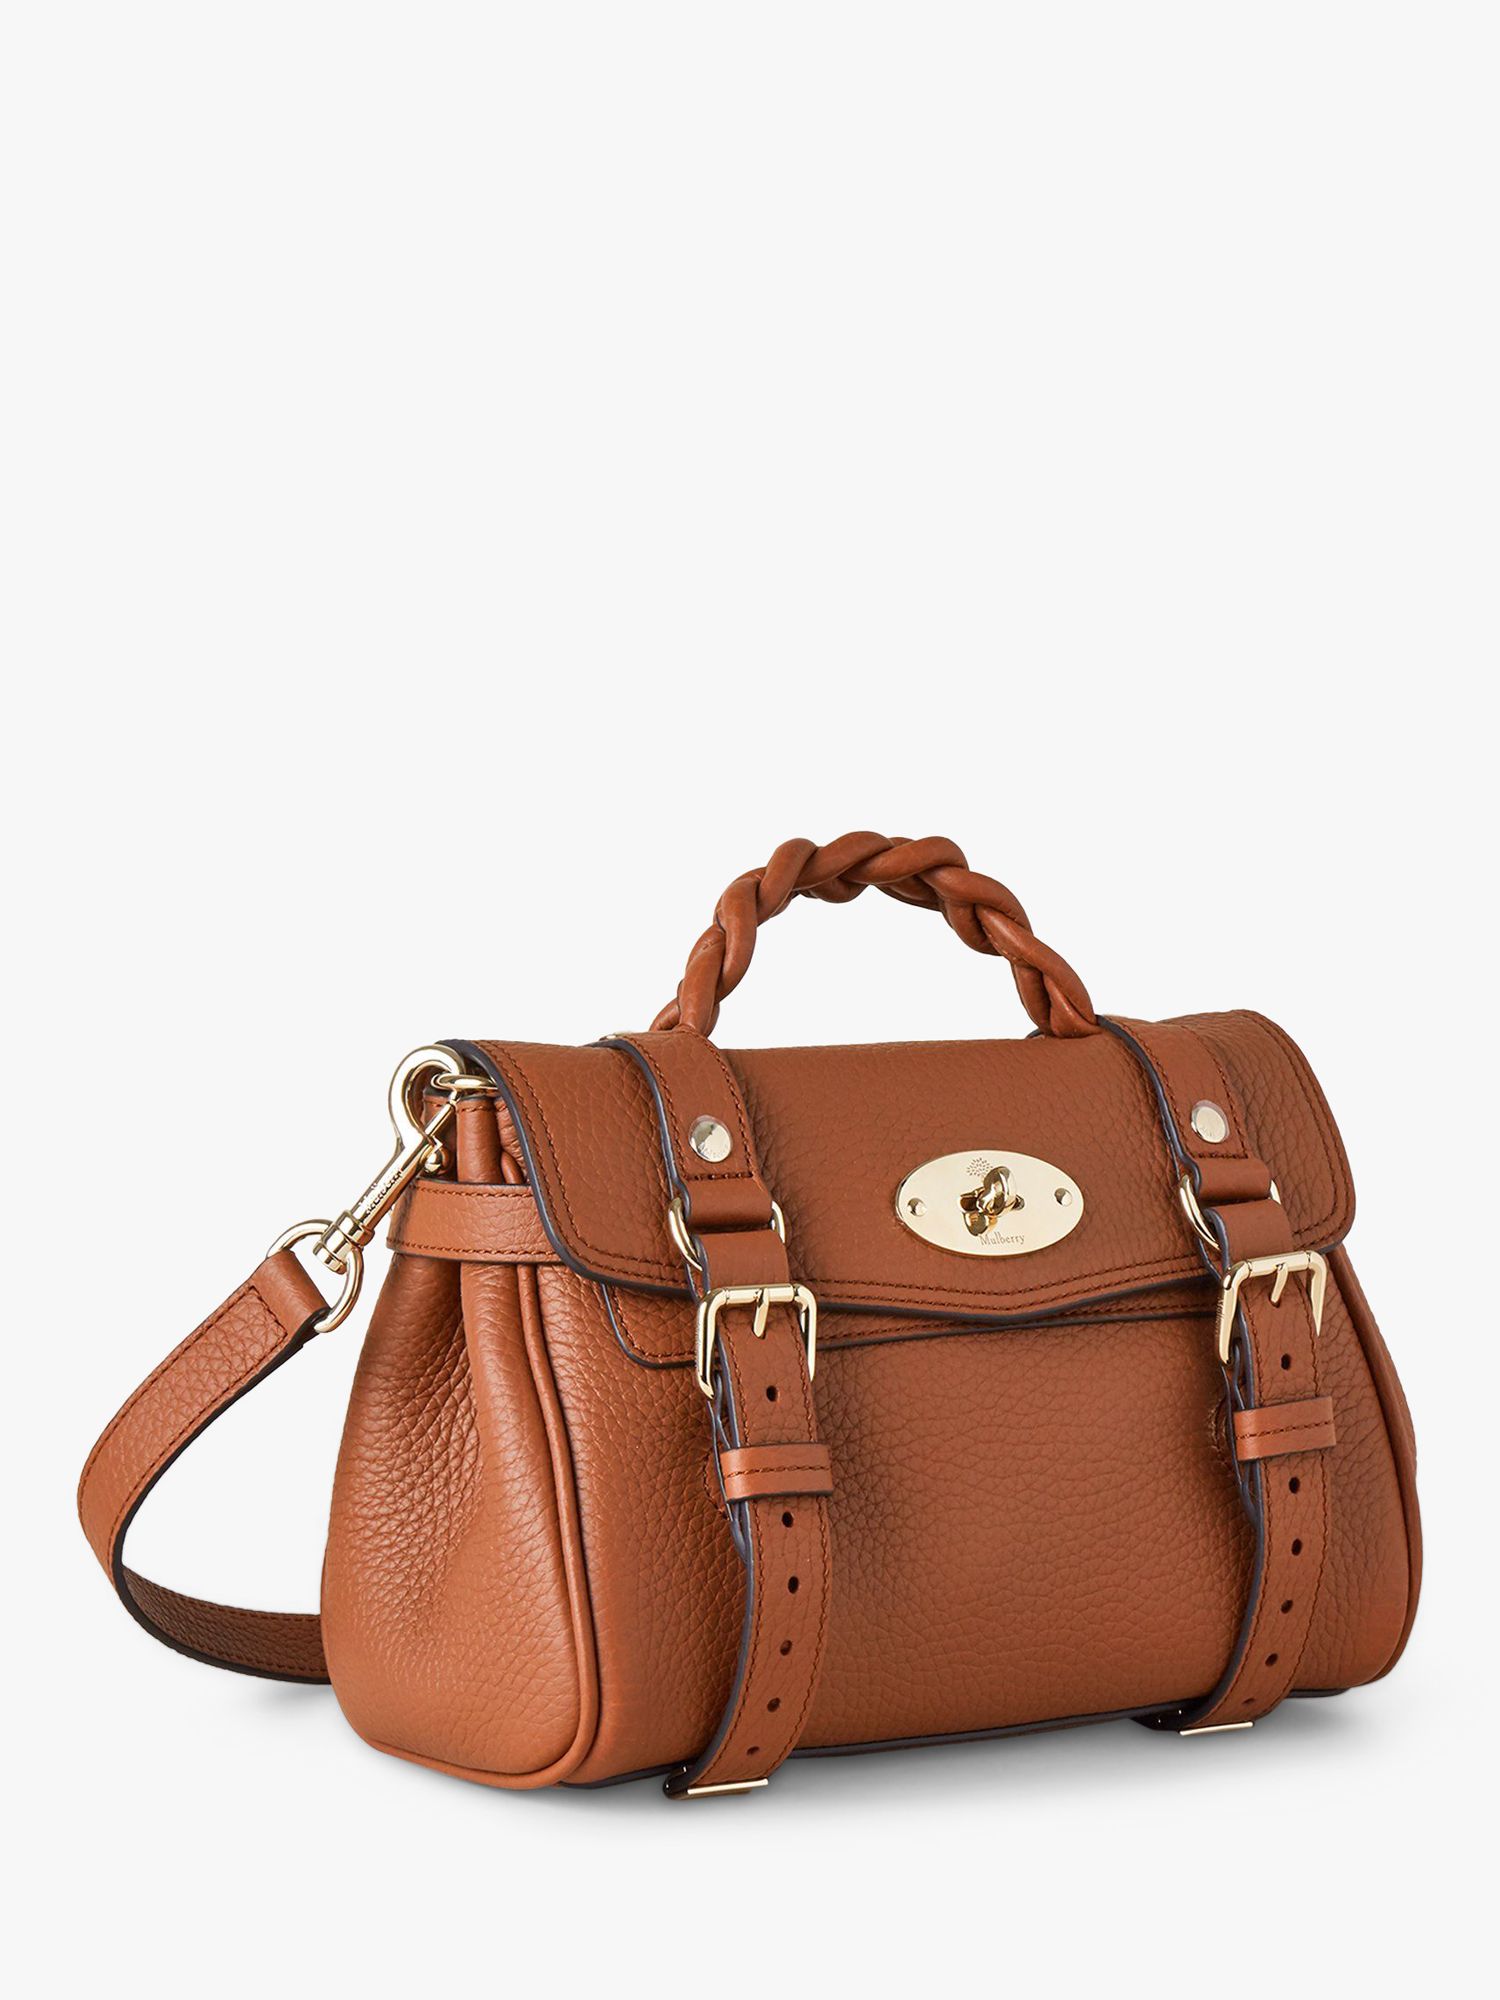 Mulberry Alexa Crossbody Bag in Brown